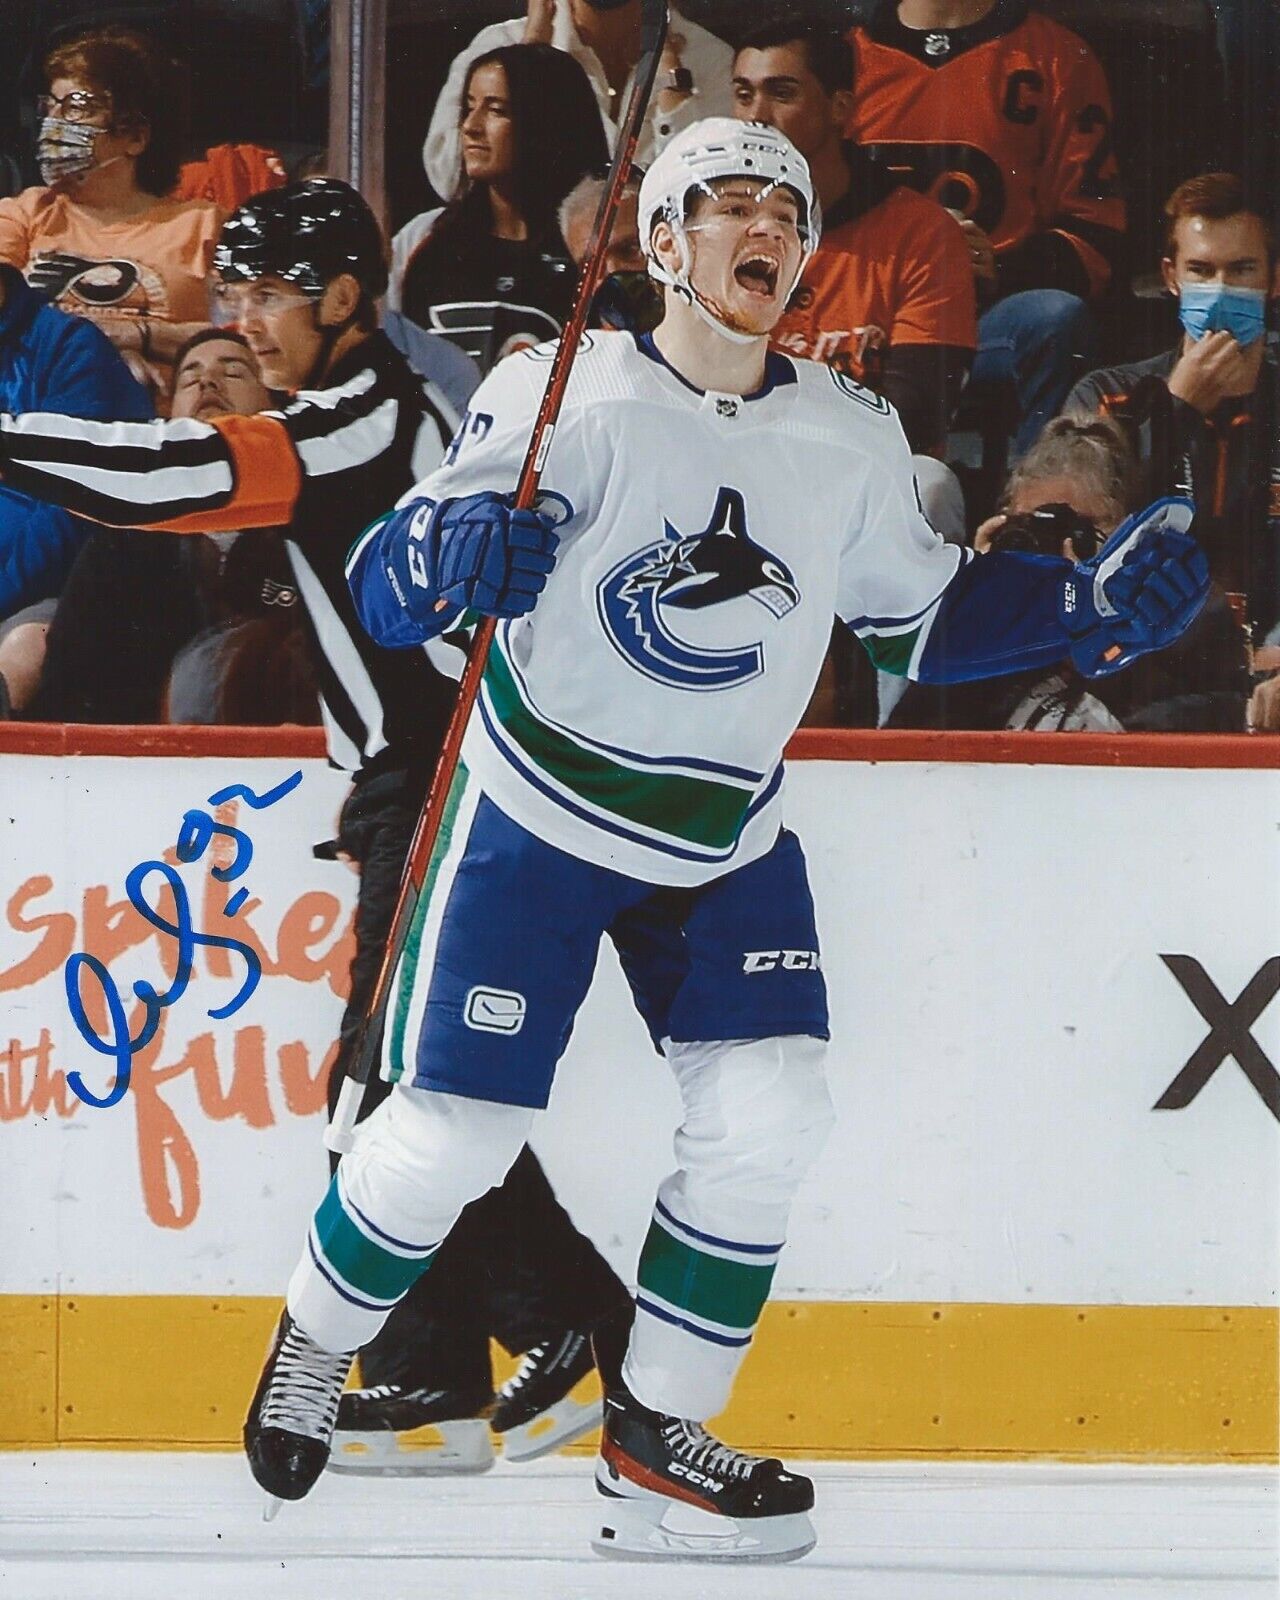 Vasily Podkolzin Signed 8x10 Photo Poster painting Vancouver Canucks 1st NHL Goal Autograph COA